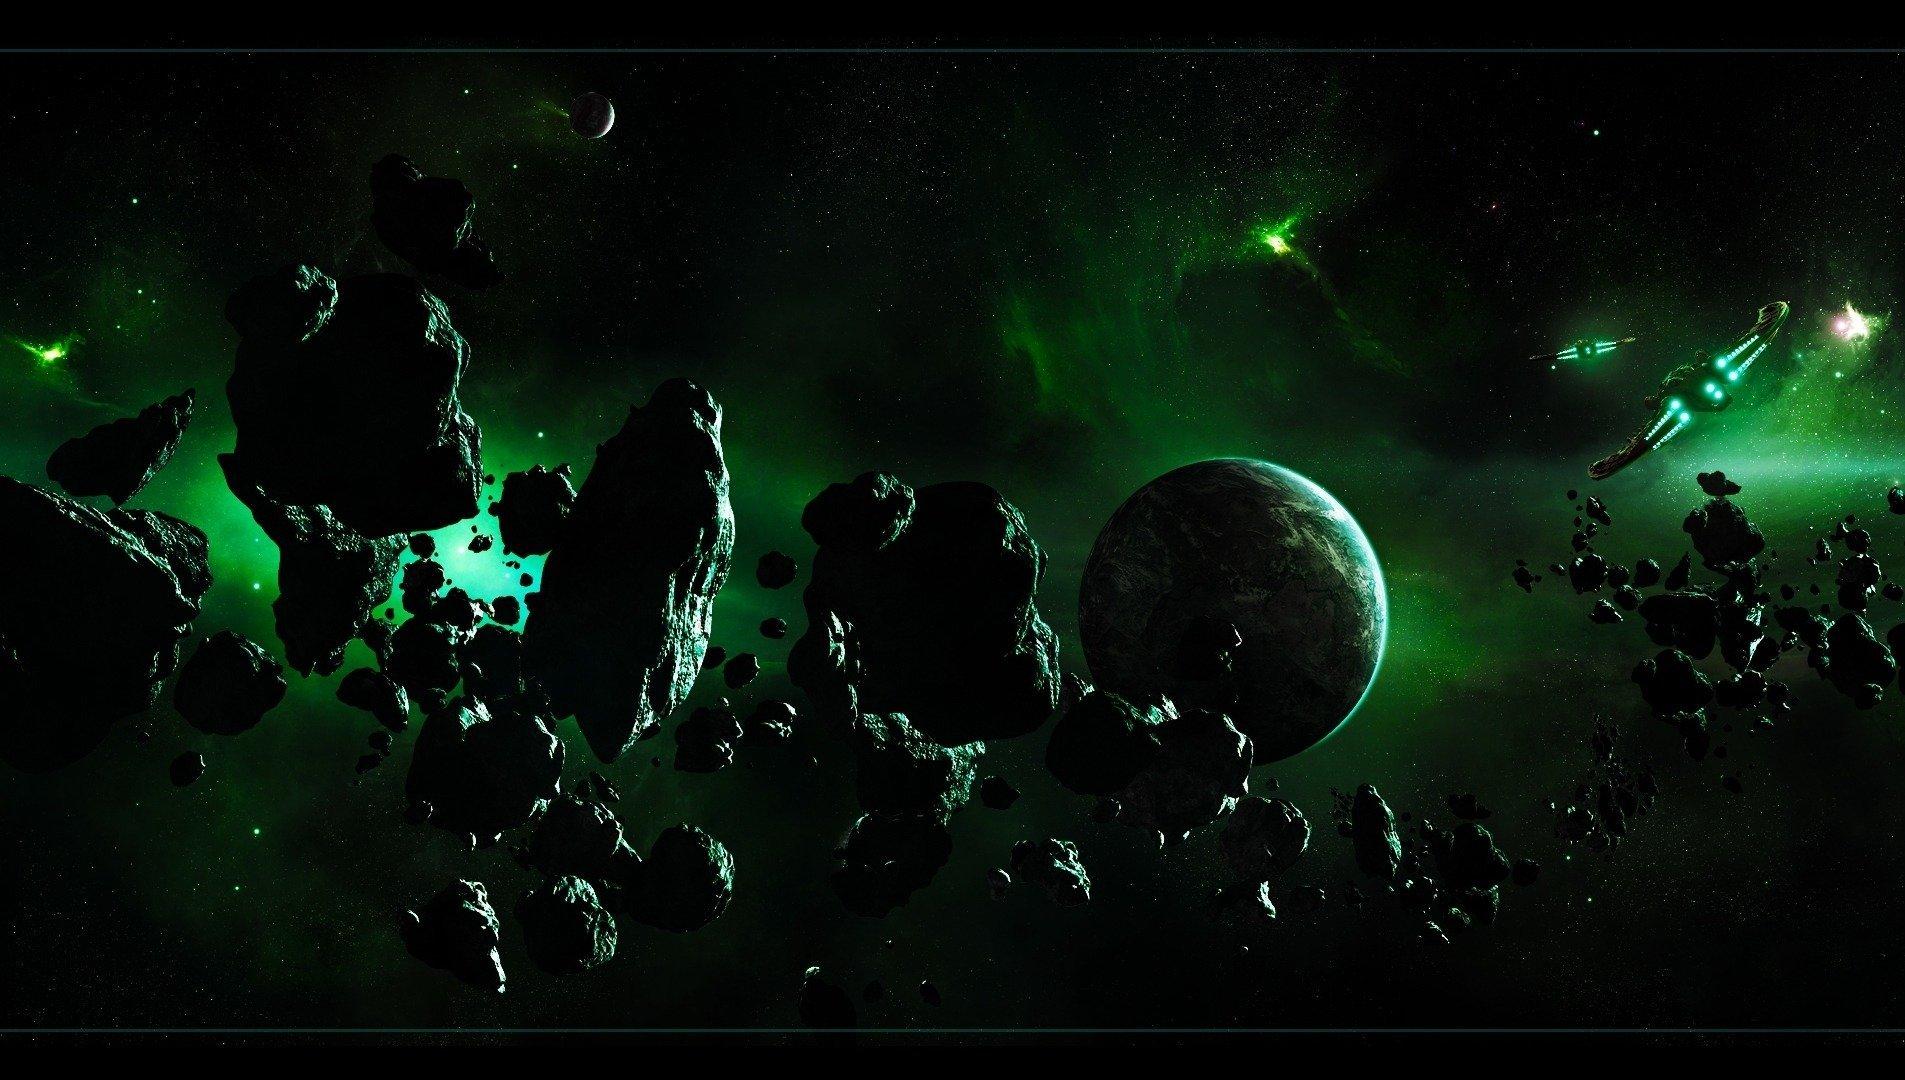 کمربند سیارک‌ها (Asteroid belt)